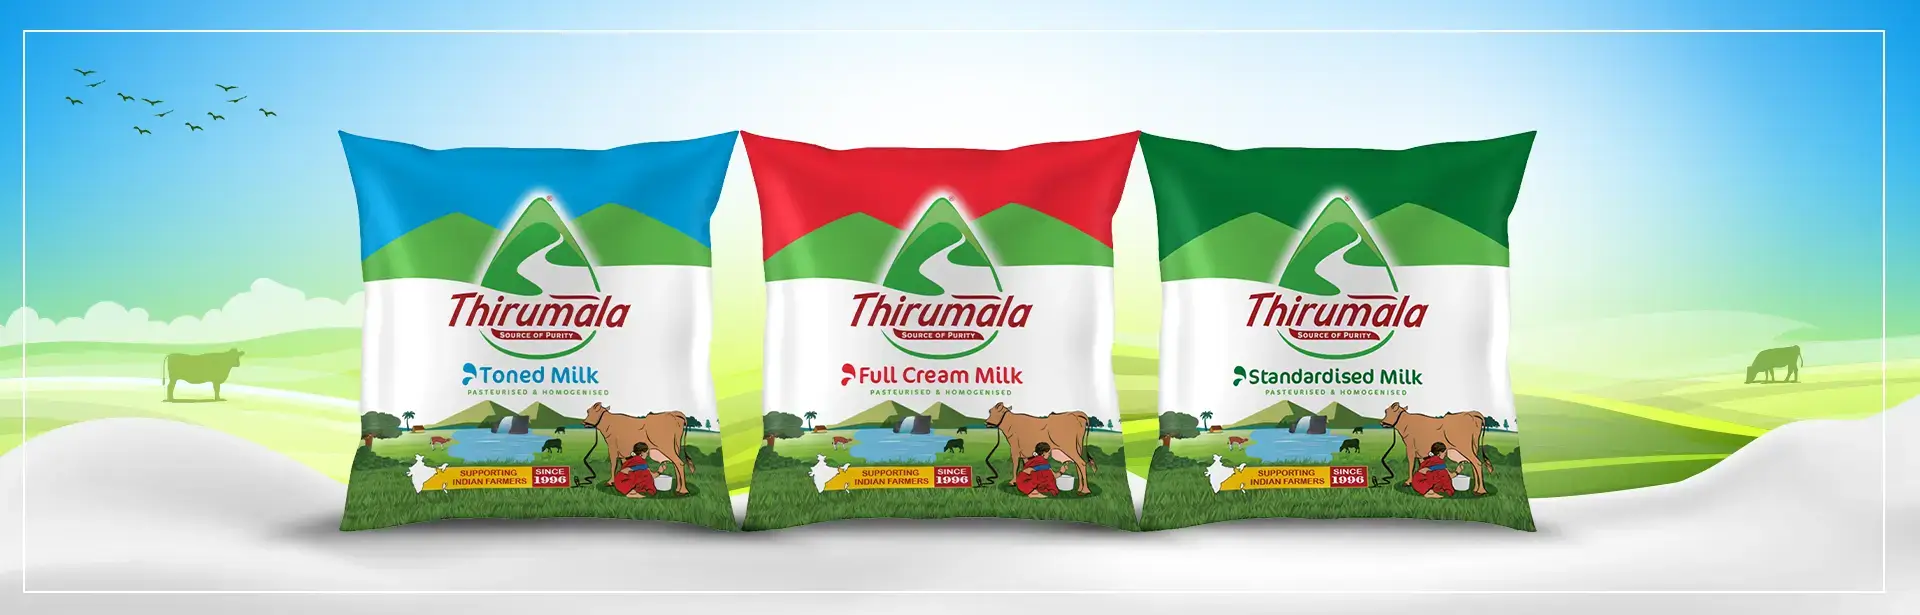 Toned Milk - Banner - Thirumala Milk 